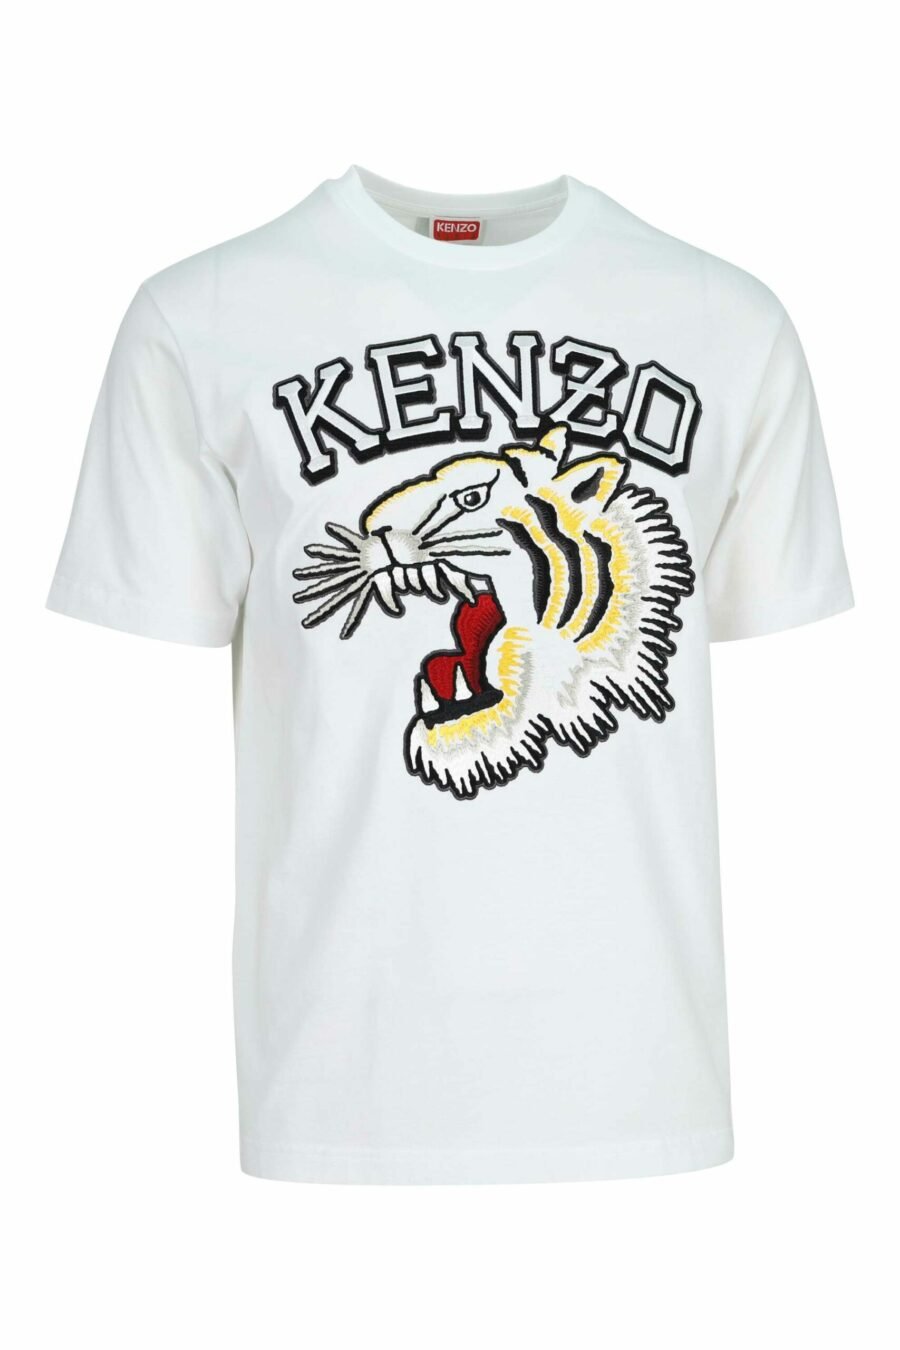 White T-shirt with multicoloured tiger maxilogo - 3612230625136 scaled